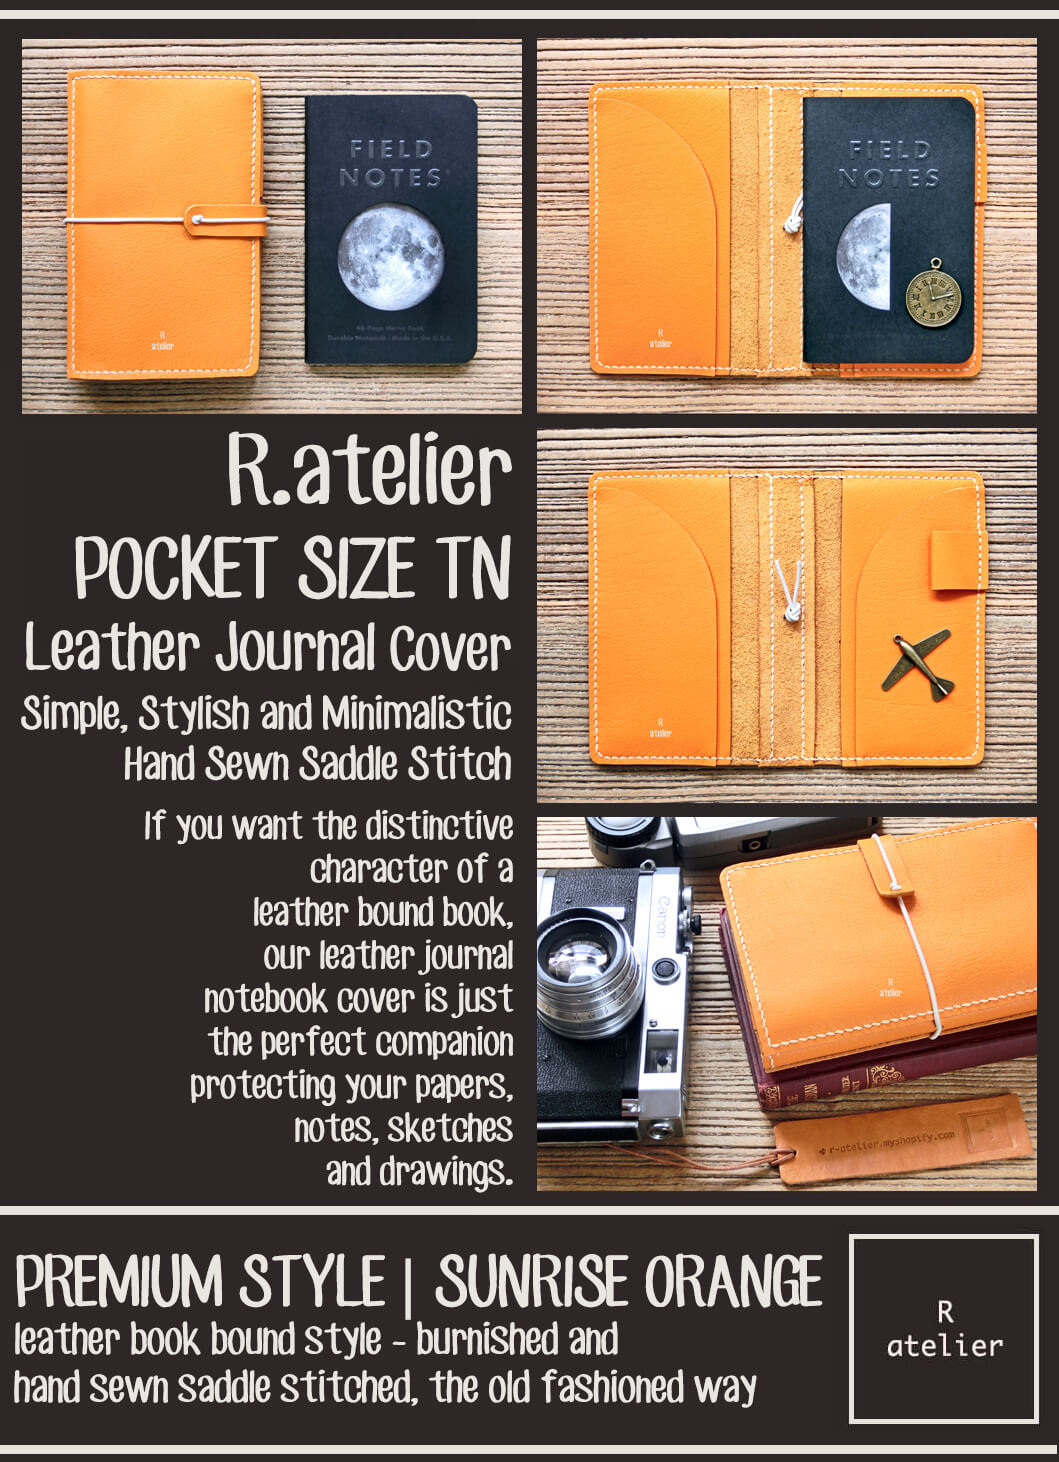 R.atelier Field Notes Pocket Size TN Leather Journal Cover | Sunrise Orange